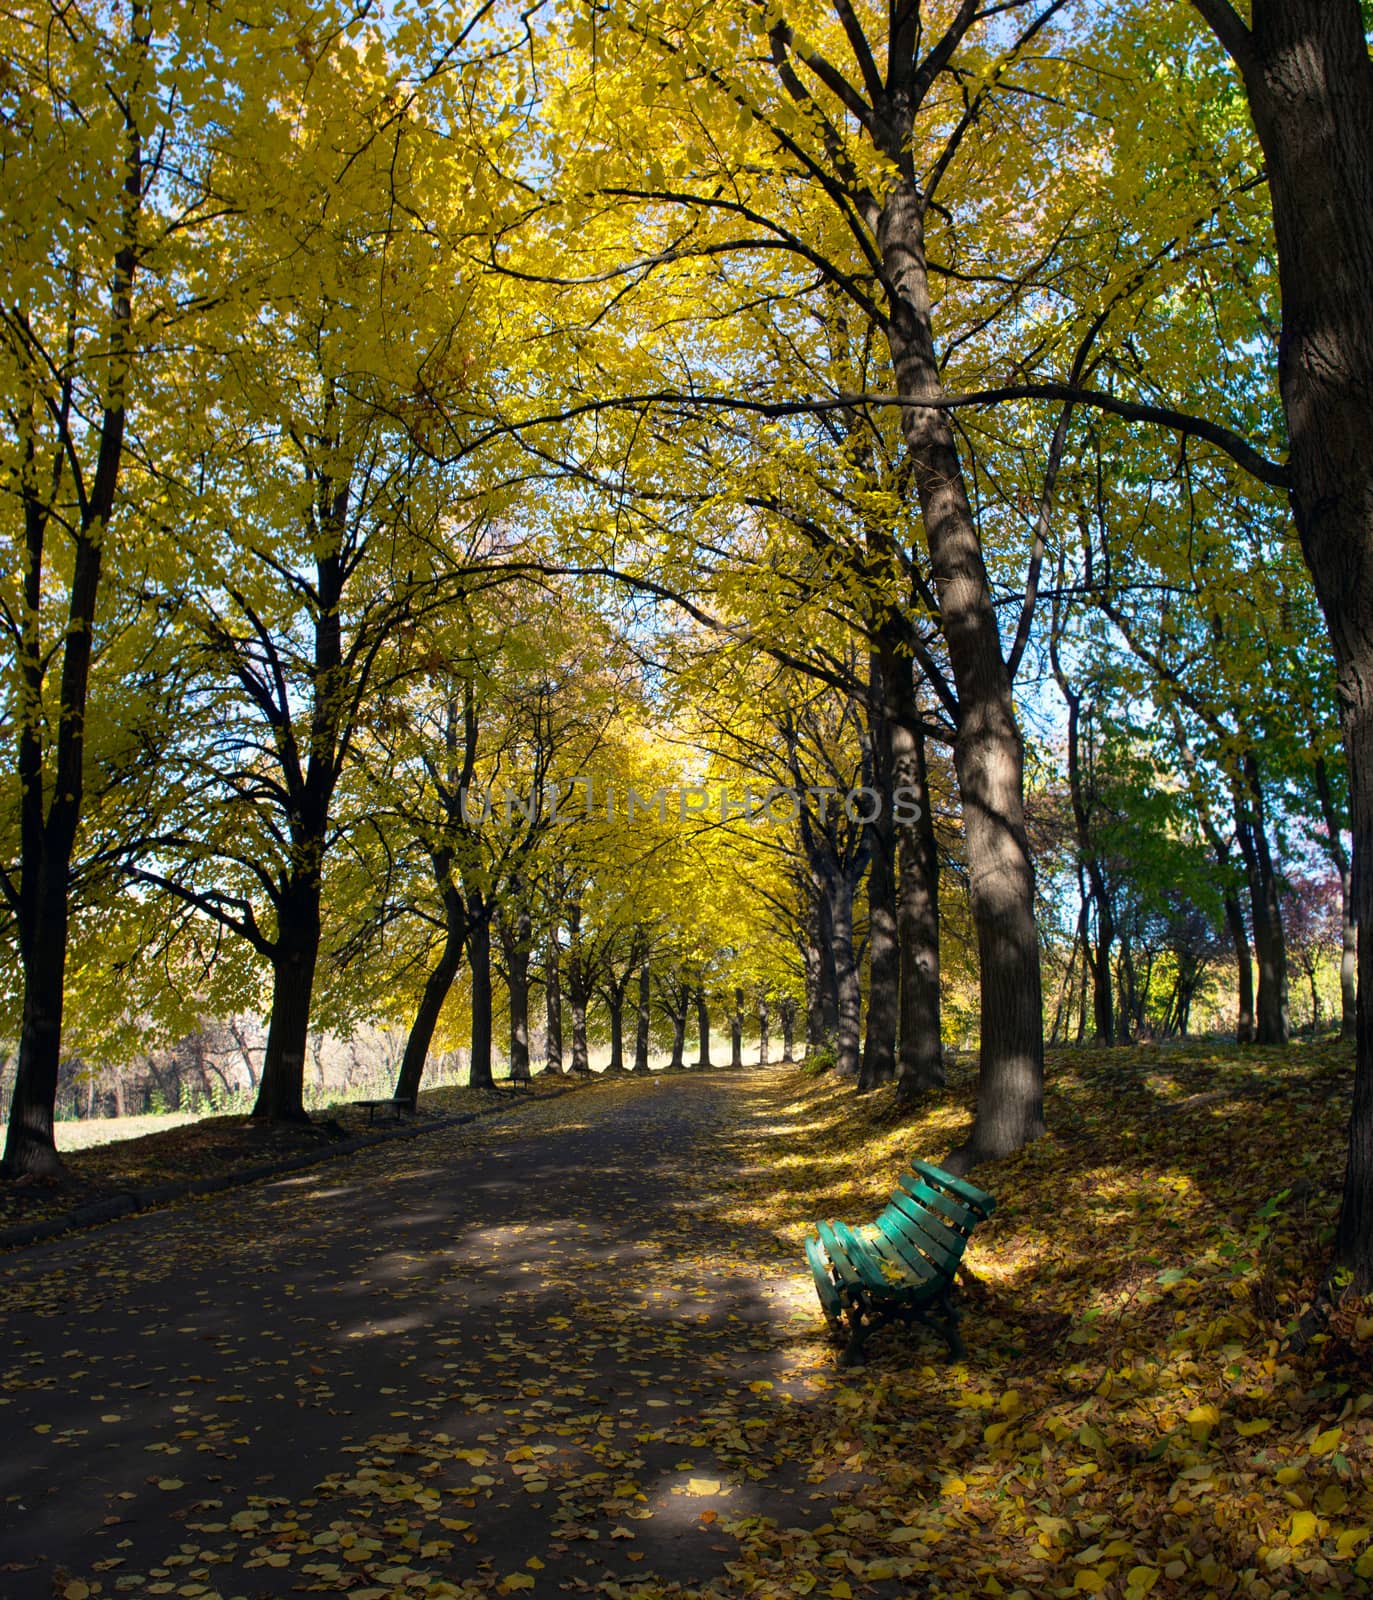 Linden alley in Kiev Botanical garden in the fall. Ukraine